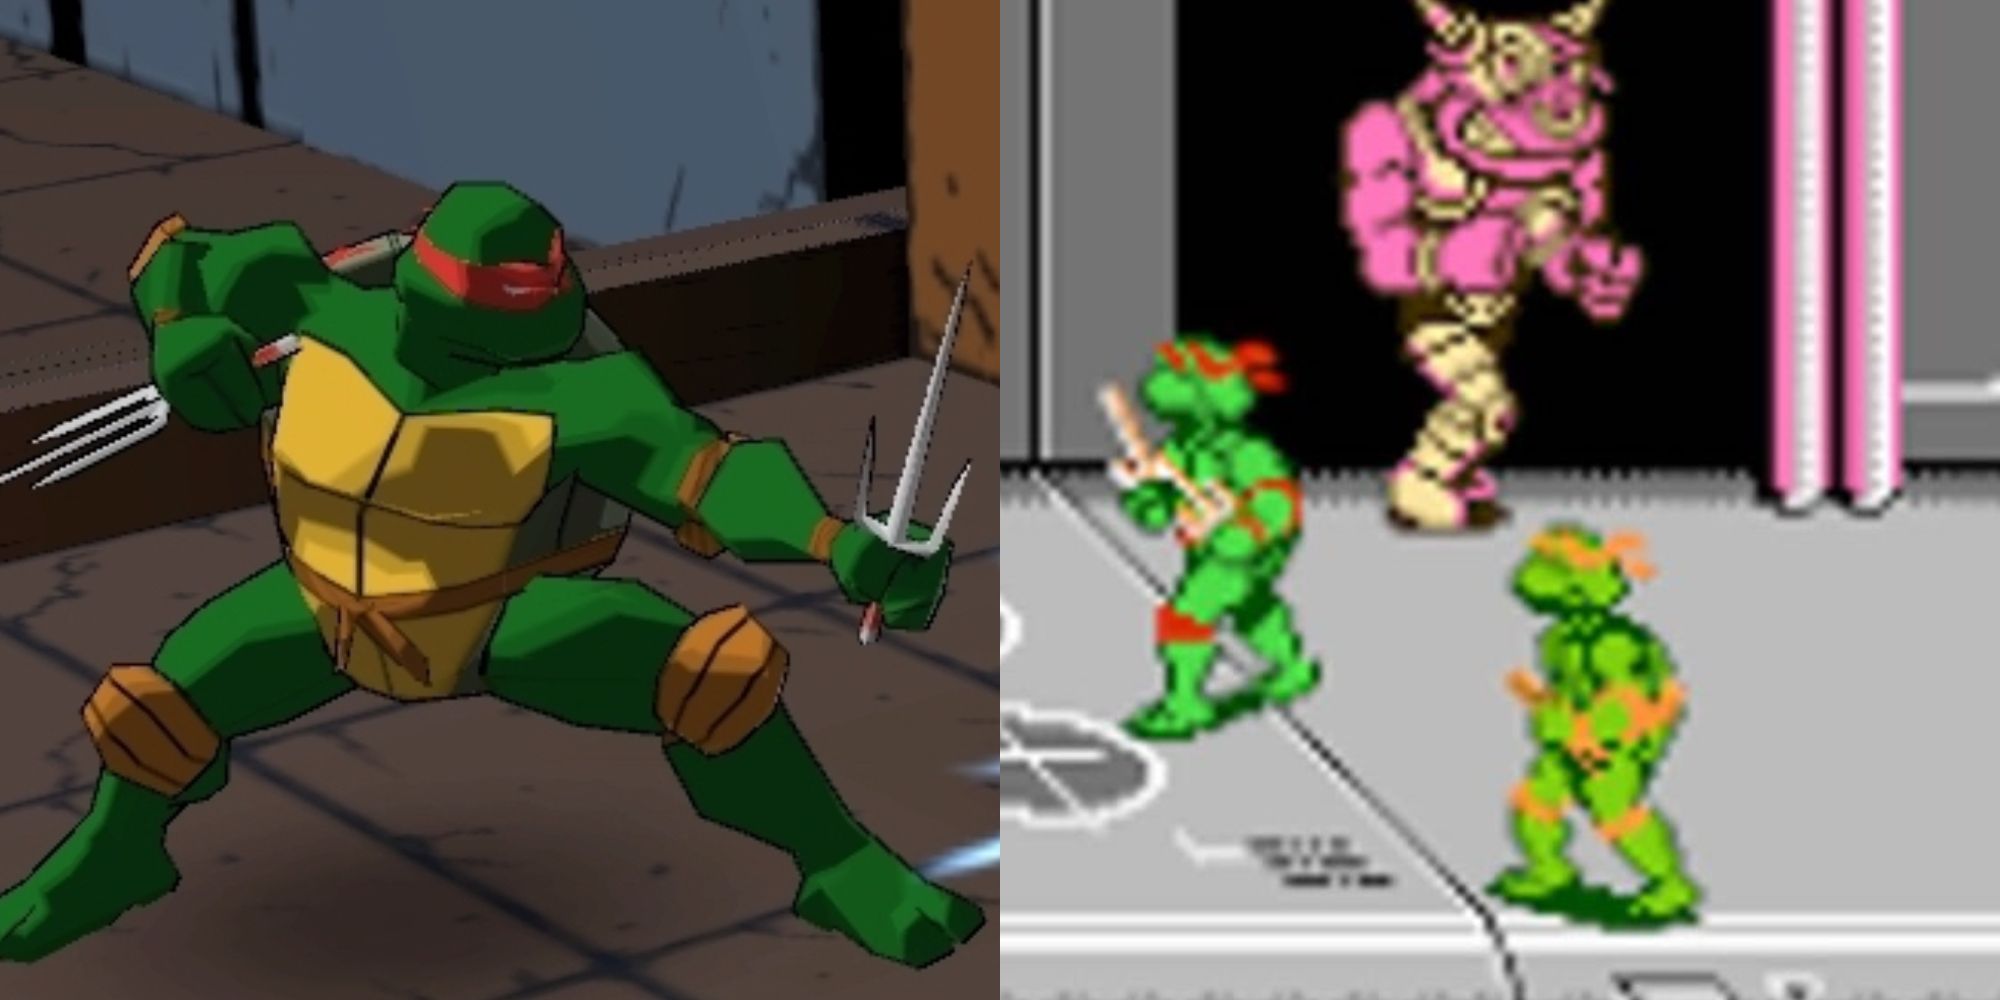 15 Best Video Games Based On The Teenage Mutant Ninja Turtles, Ranked